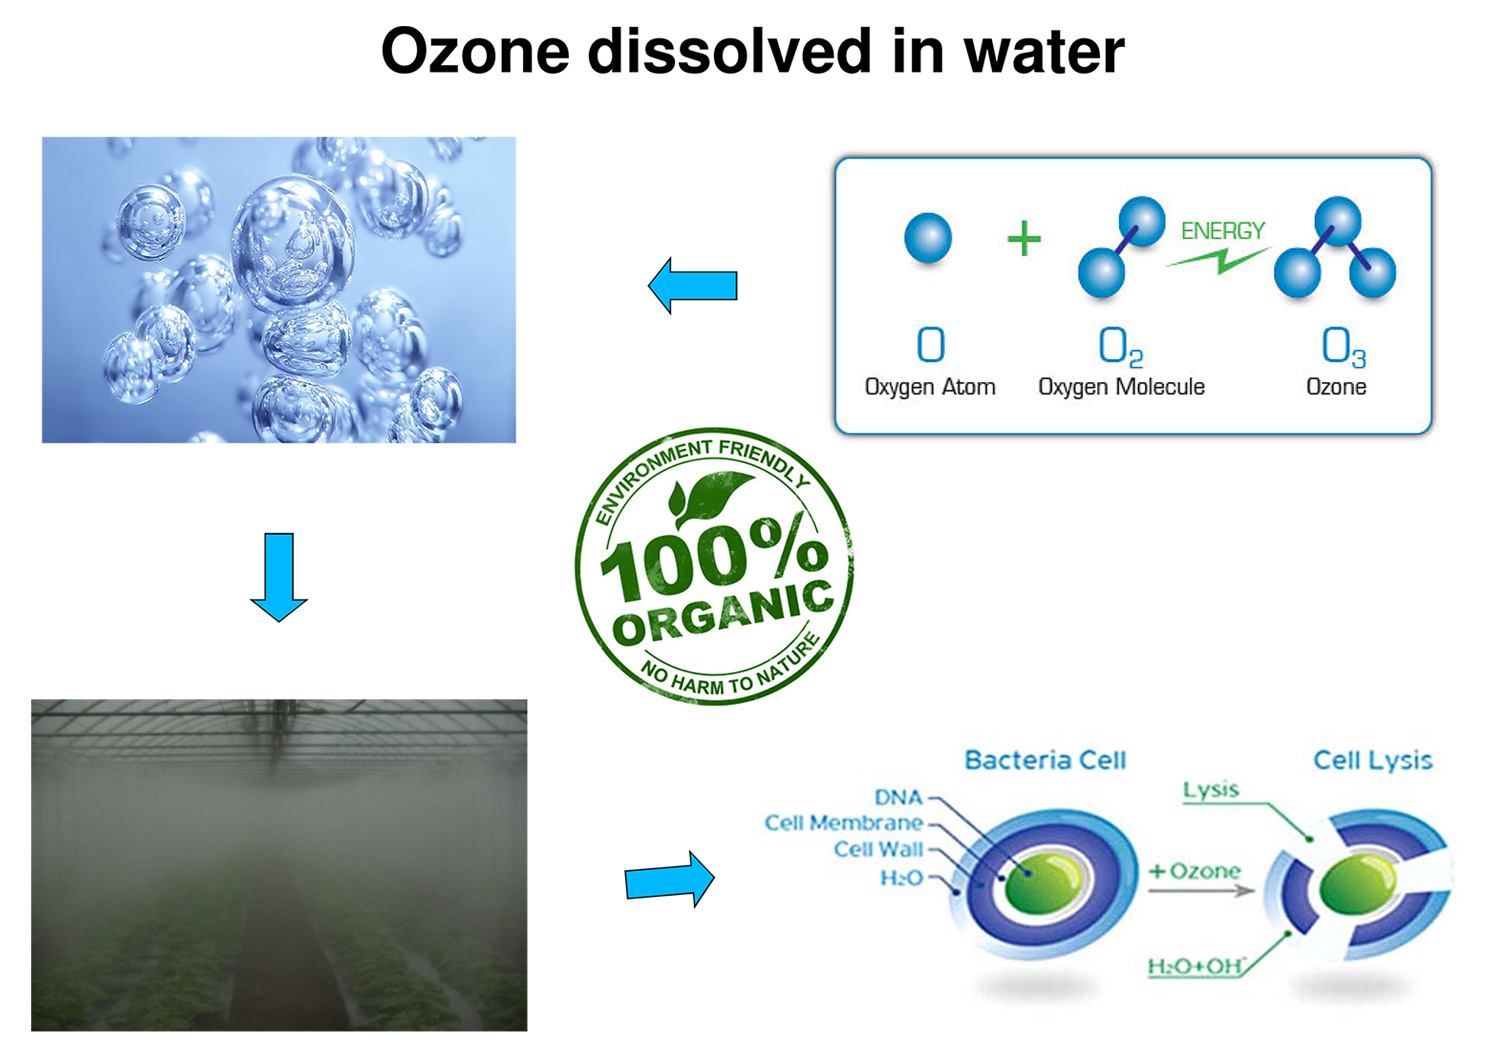 Ozono-therapy